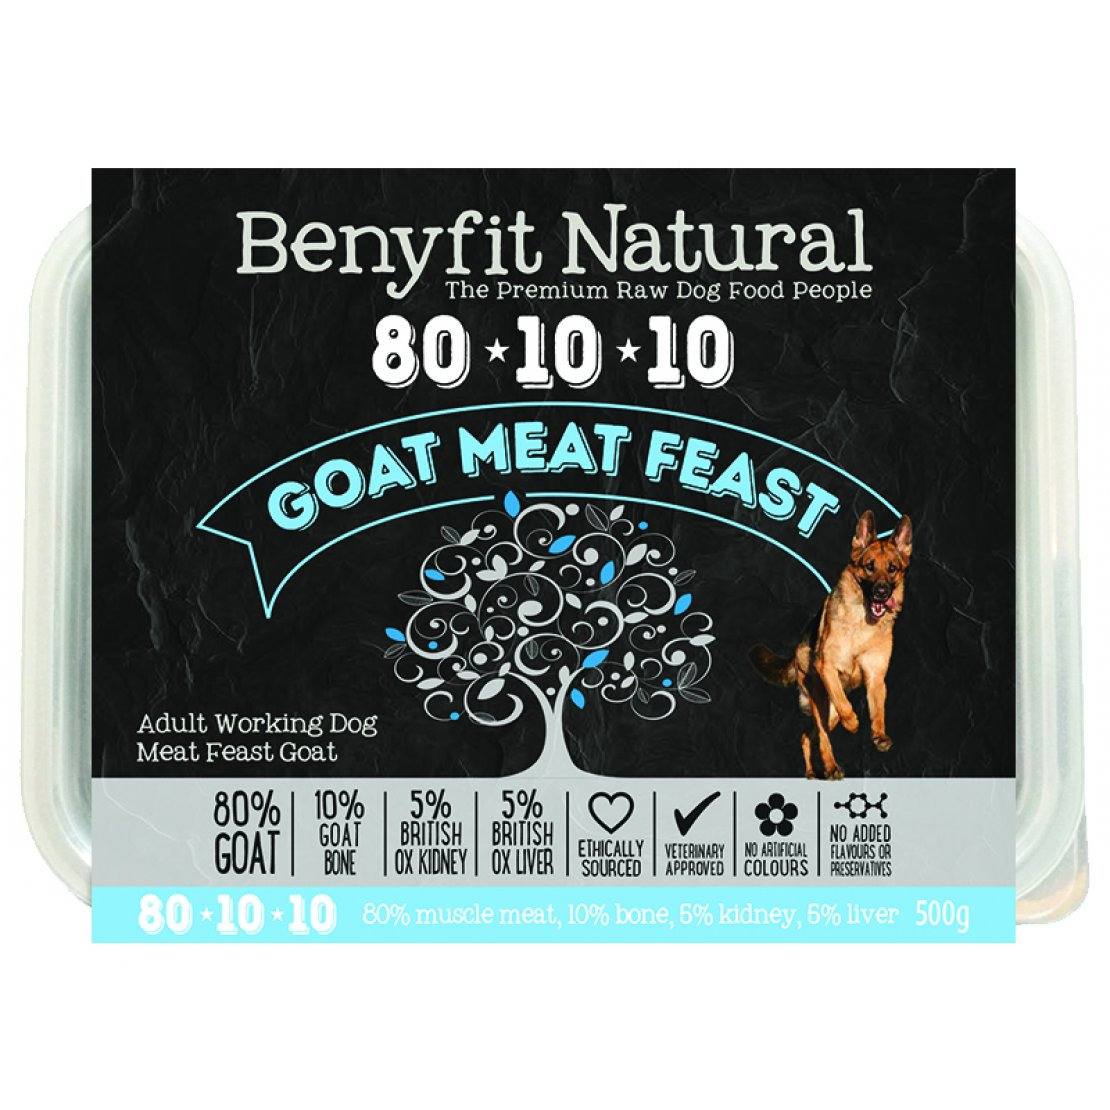 Benyfit Natural 80 10 10 Dog Food Viovet Free Delivery Available